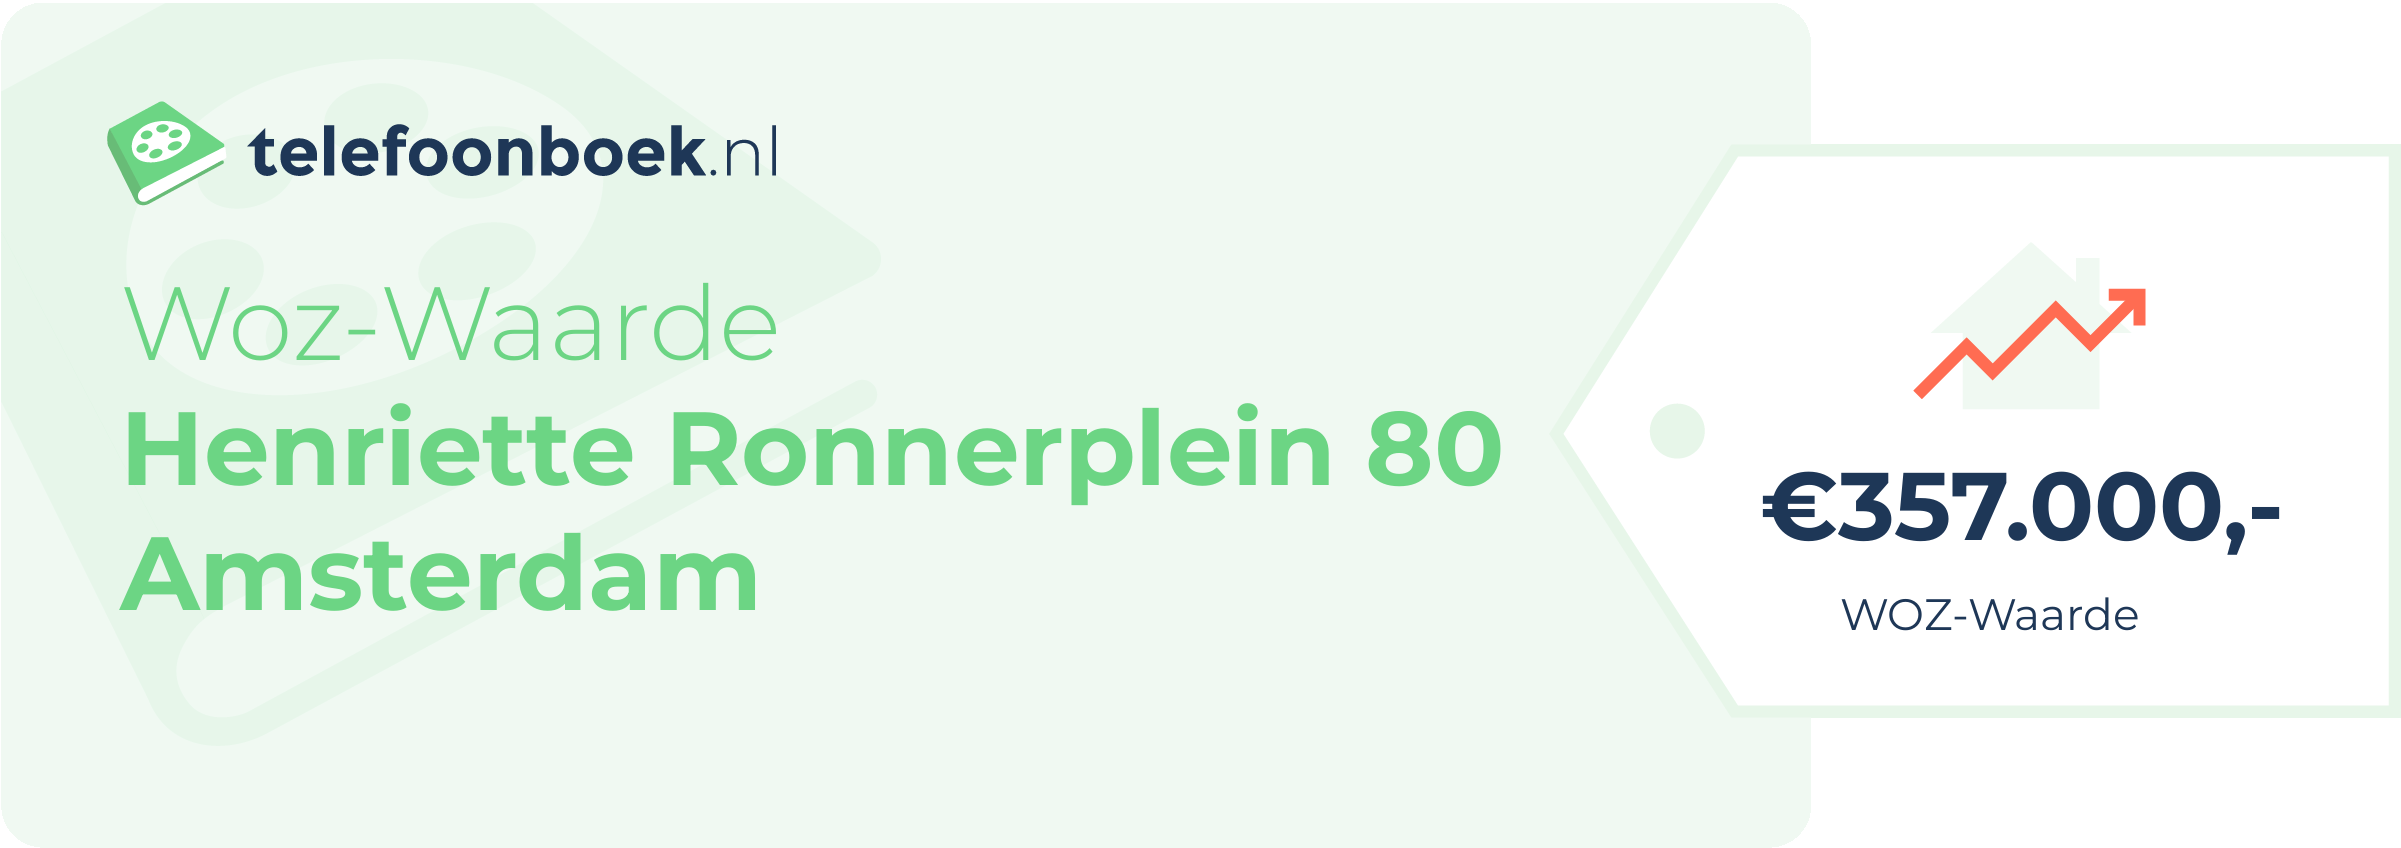 WOZ-waarde Henriette Ronnerplein 80 Amsterdam